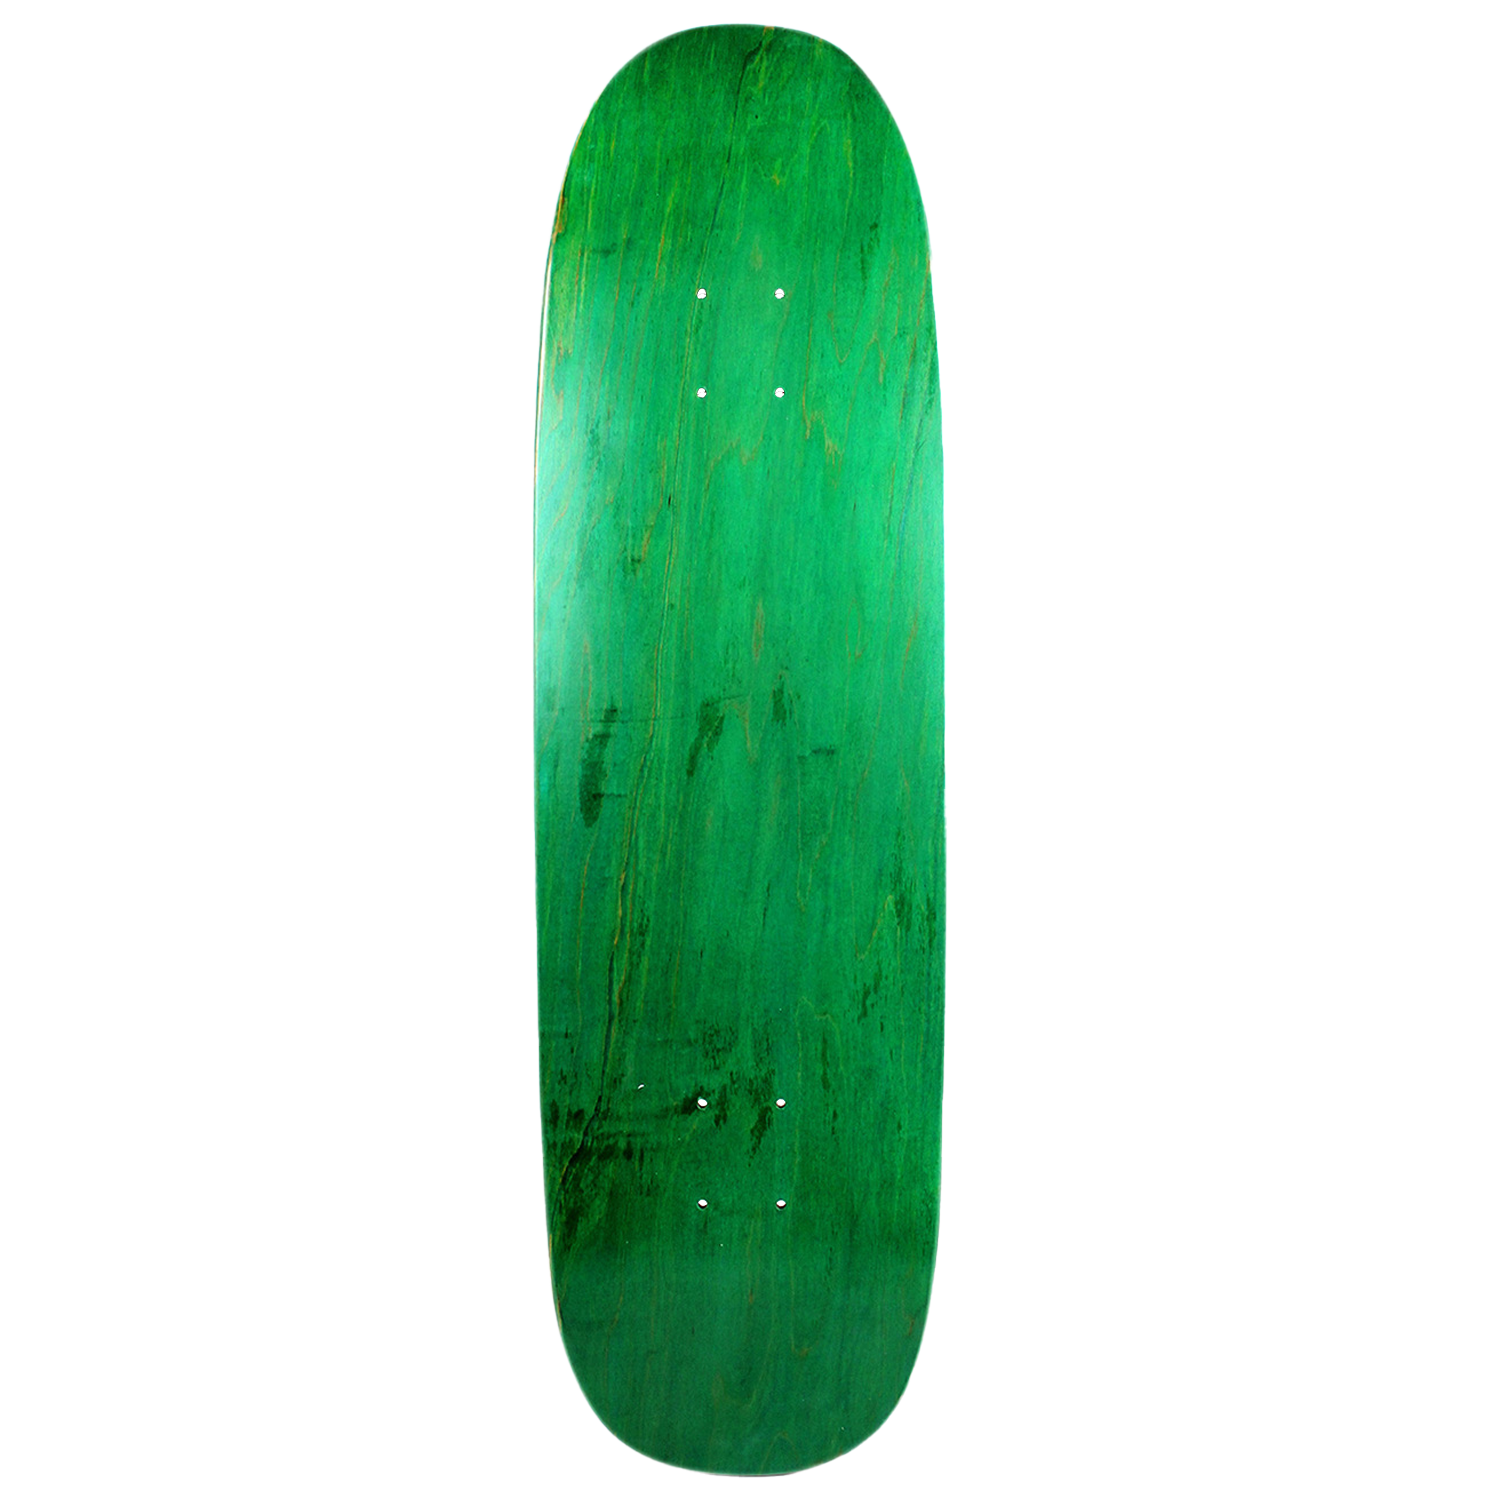 Moose Skateboard Old School Deck Popsicle Nose Stain Green 8.75in x 32.1in